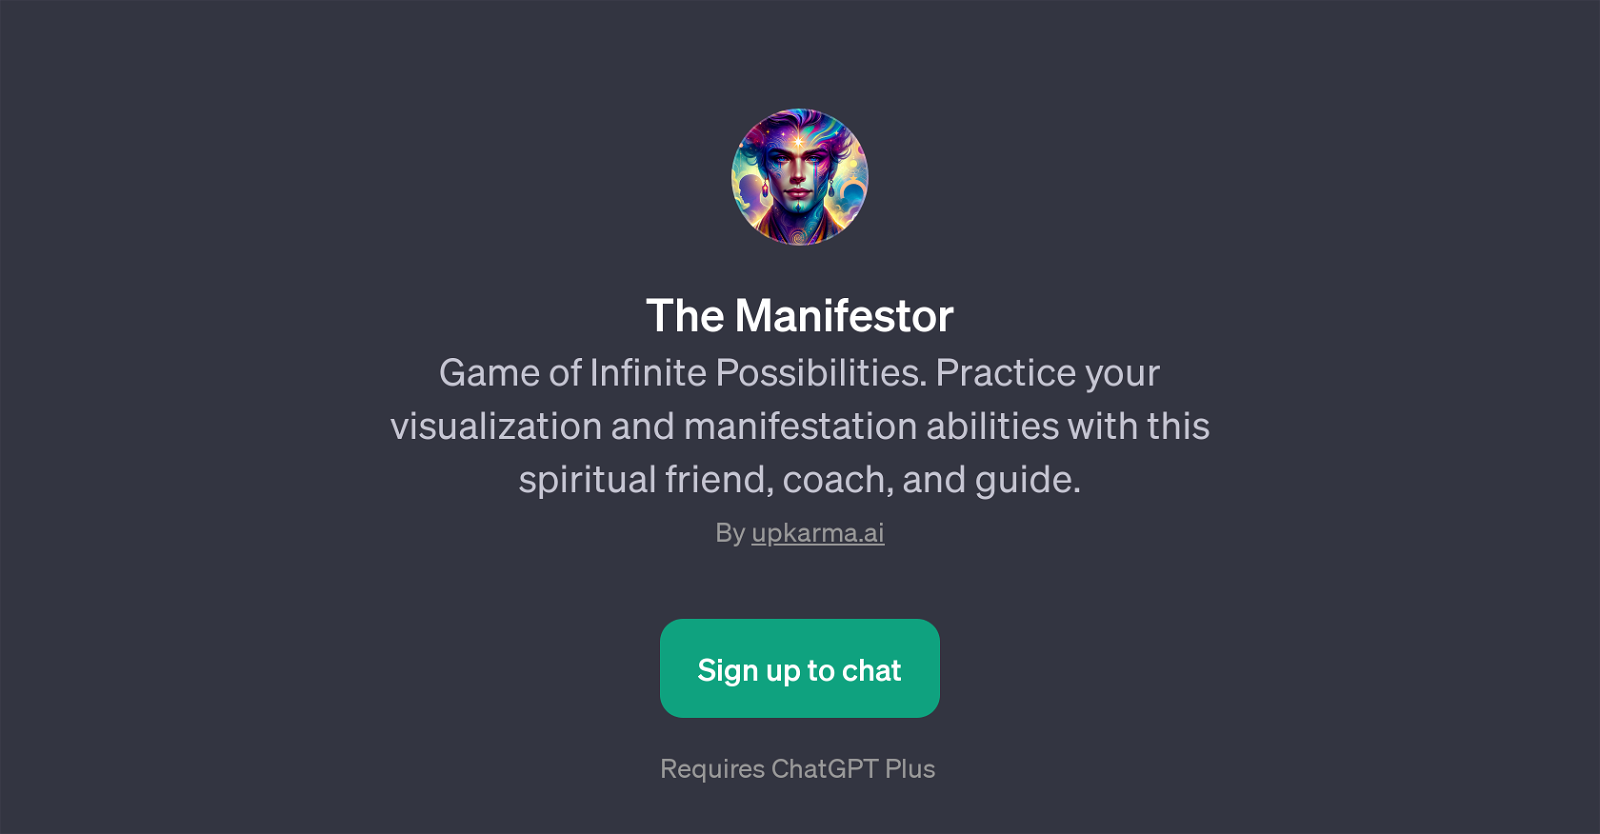 The Manifestor website